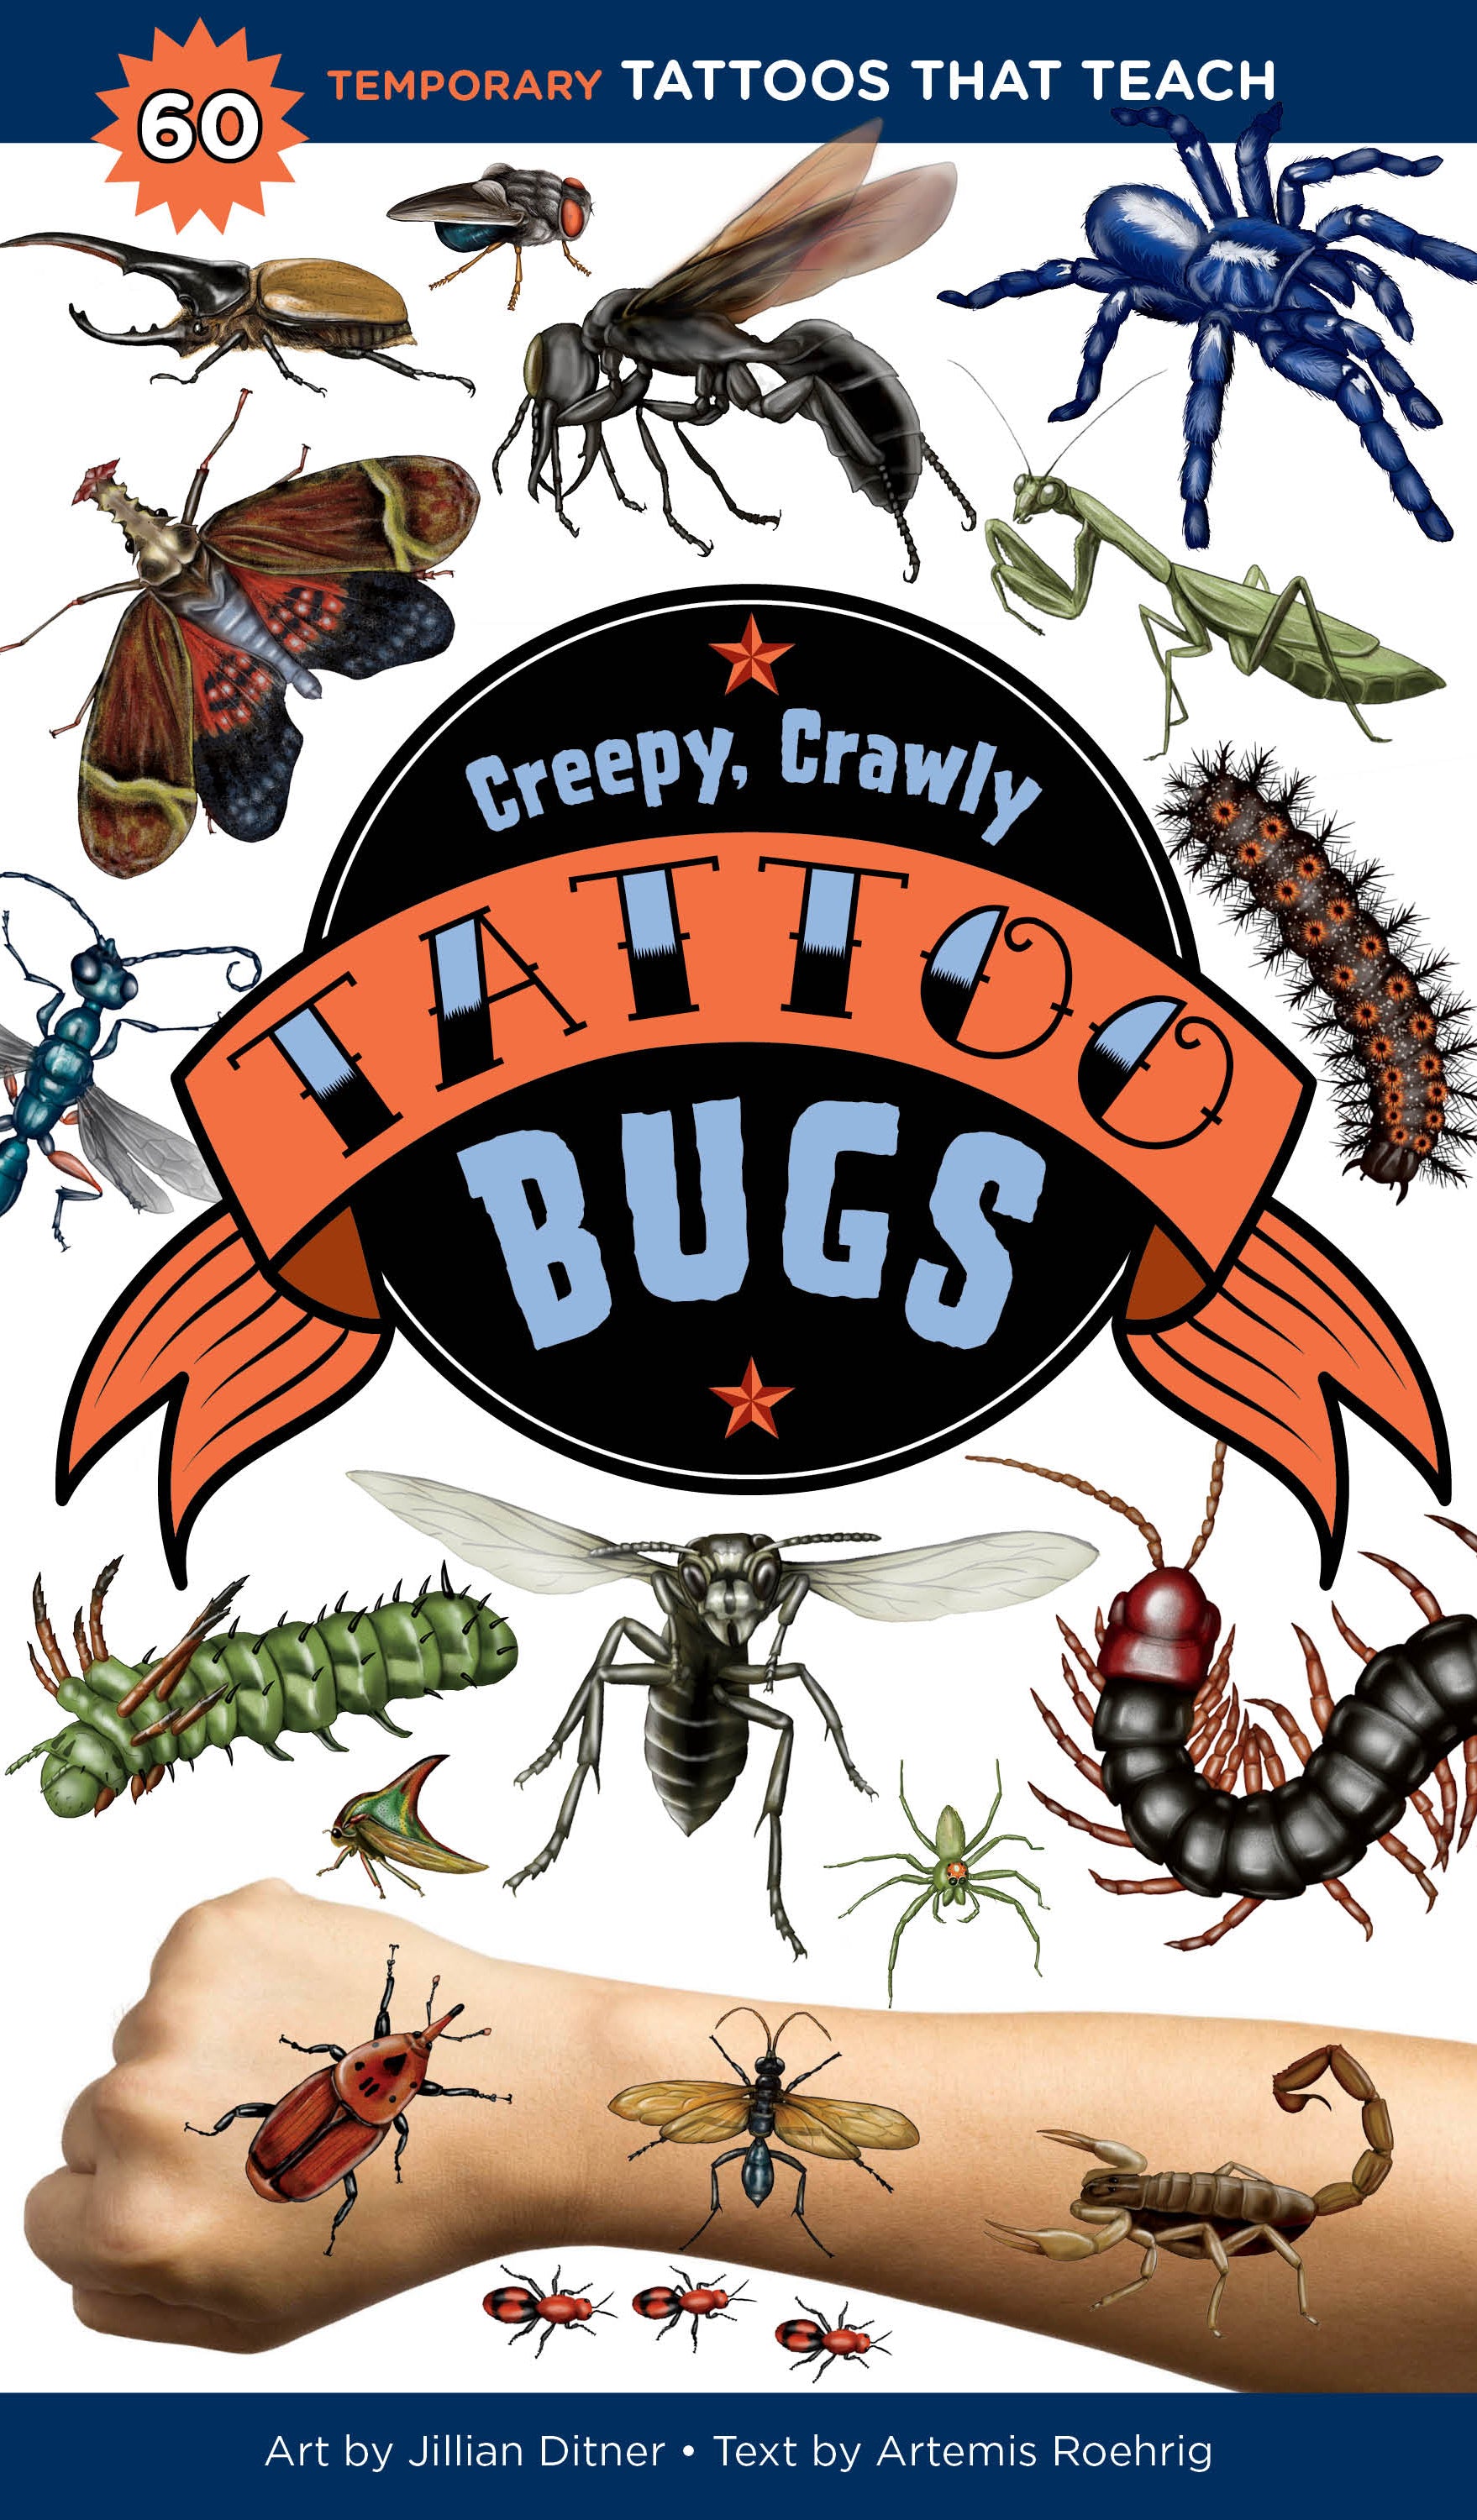 Creepy, Crawly, Tattoo Bugs